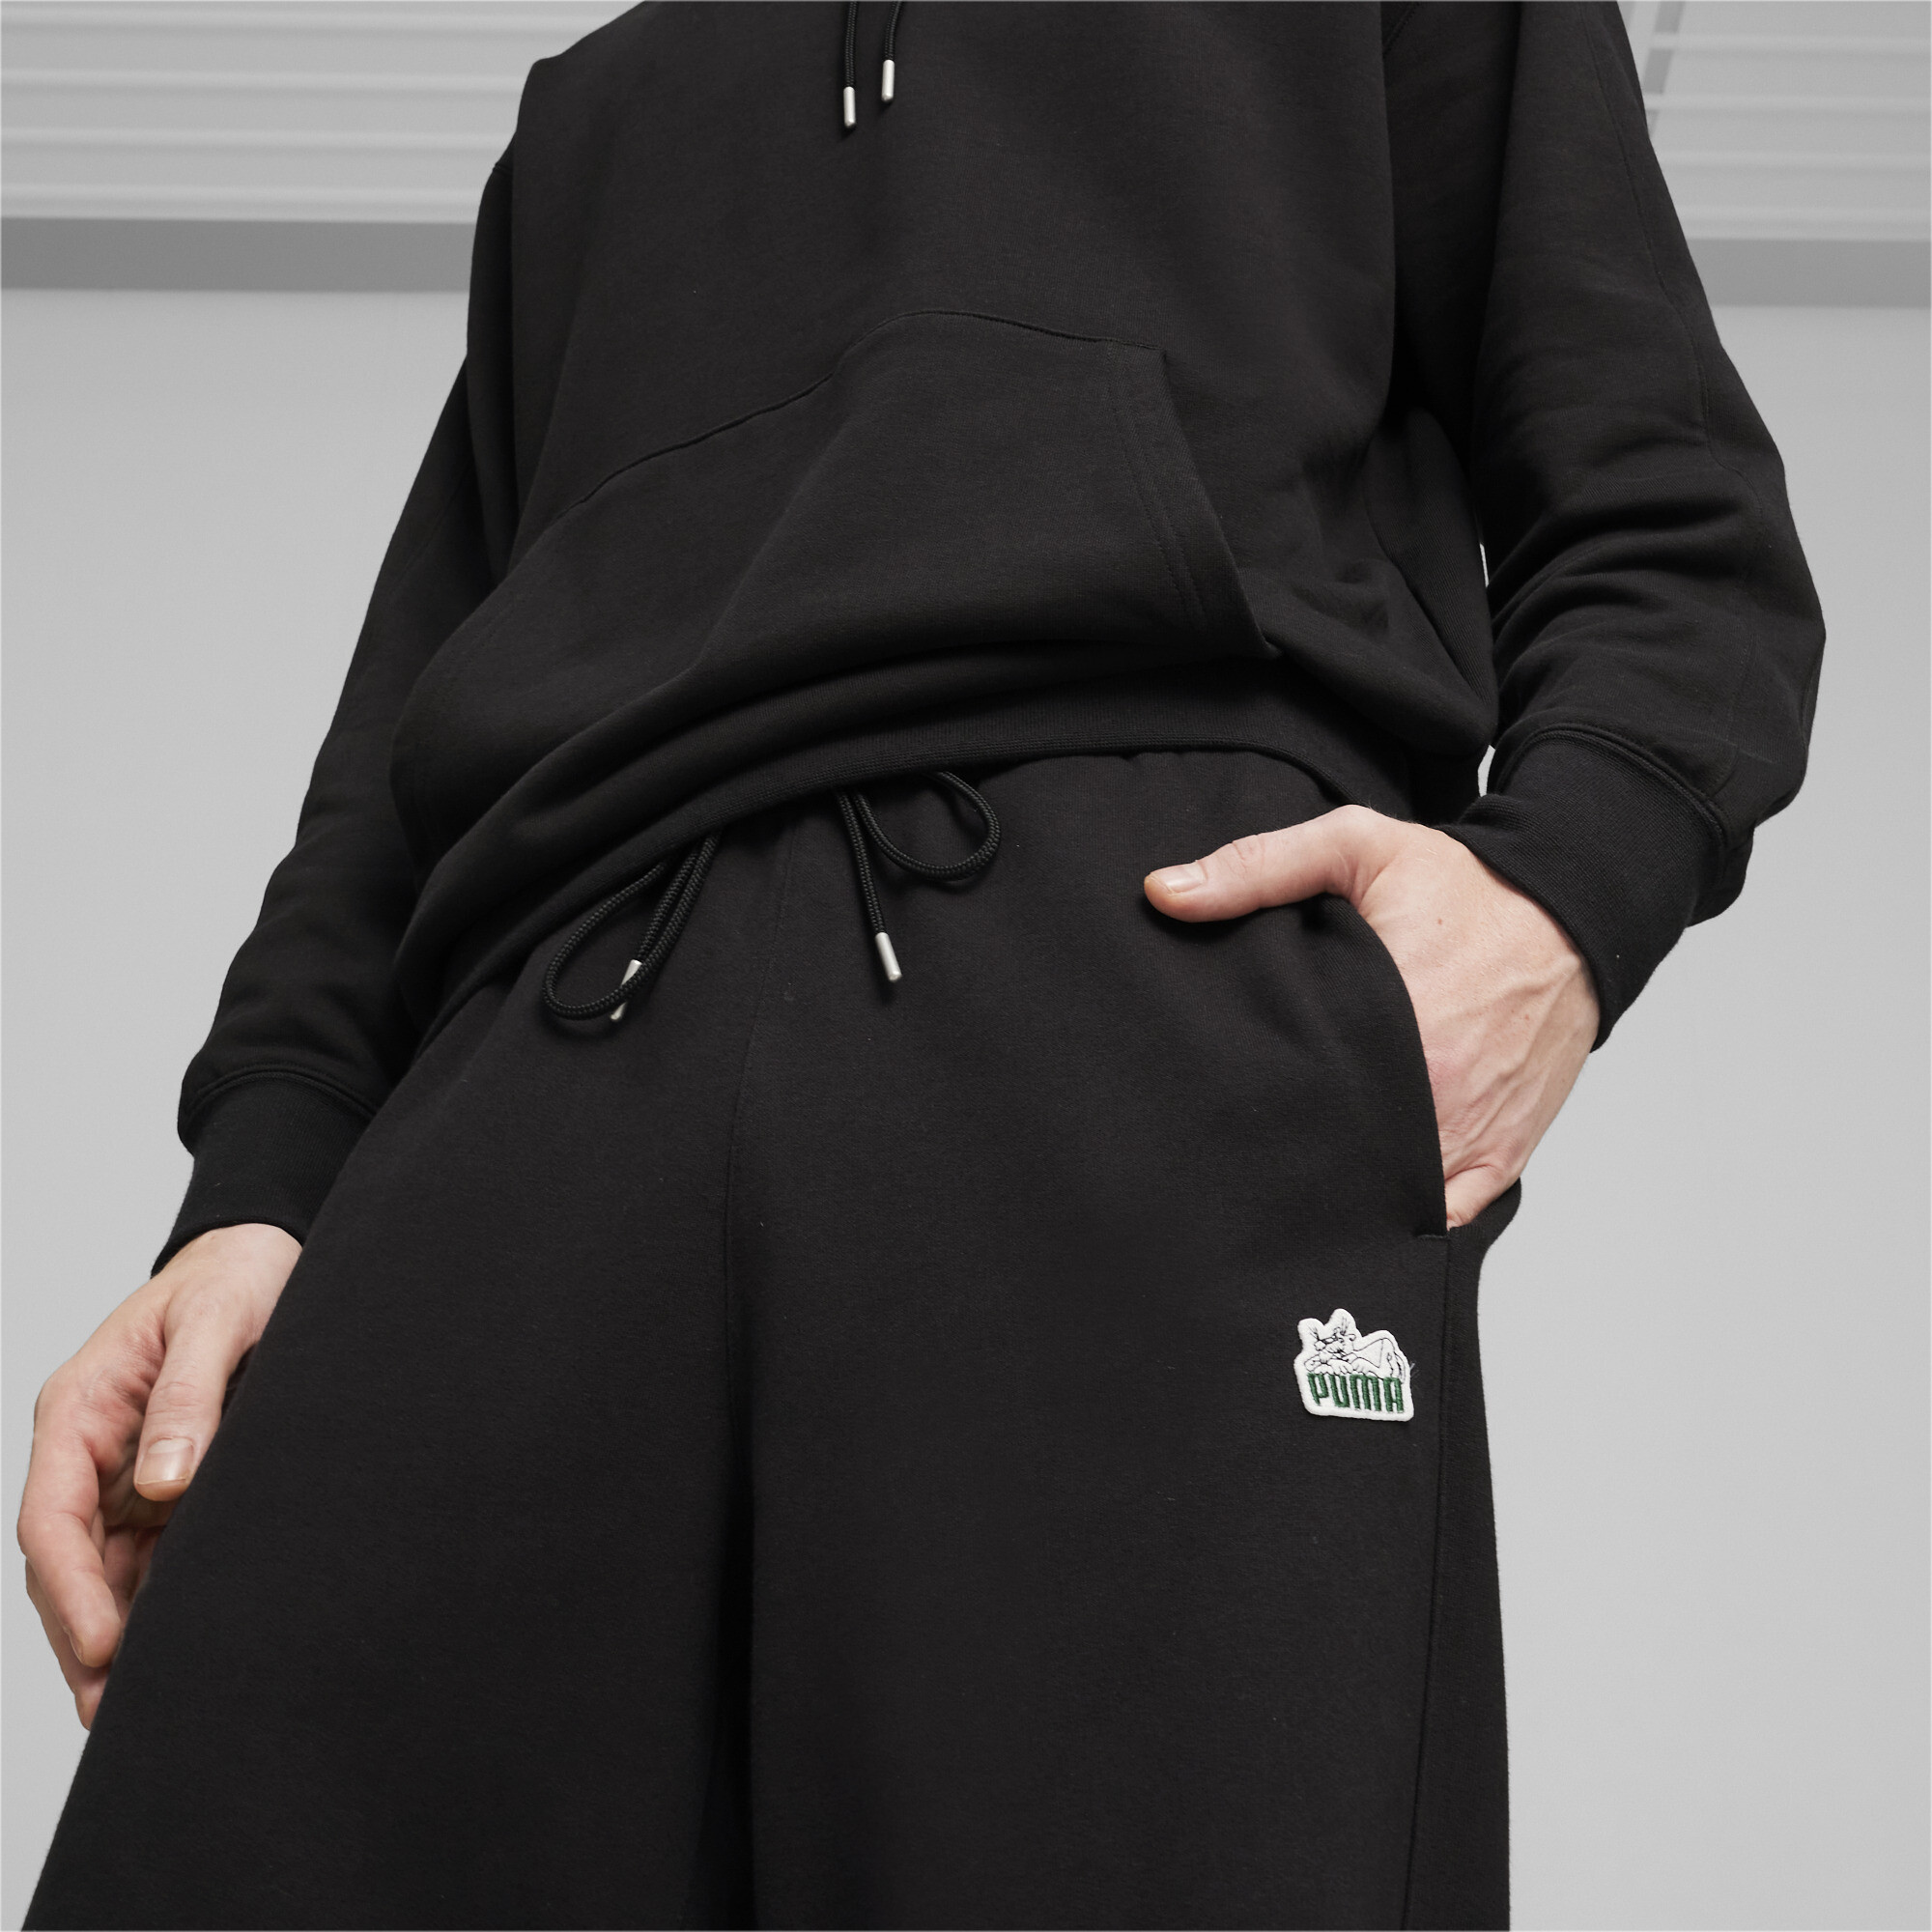 Men's T7 FTF Super PUMA Sweatpants In 10 - Black, Size XS